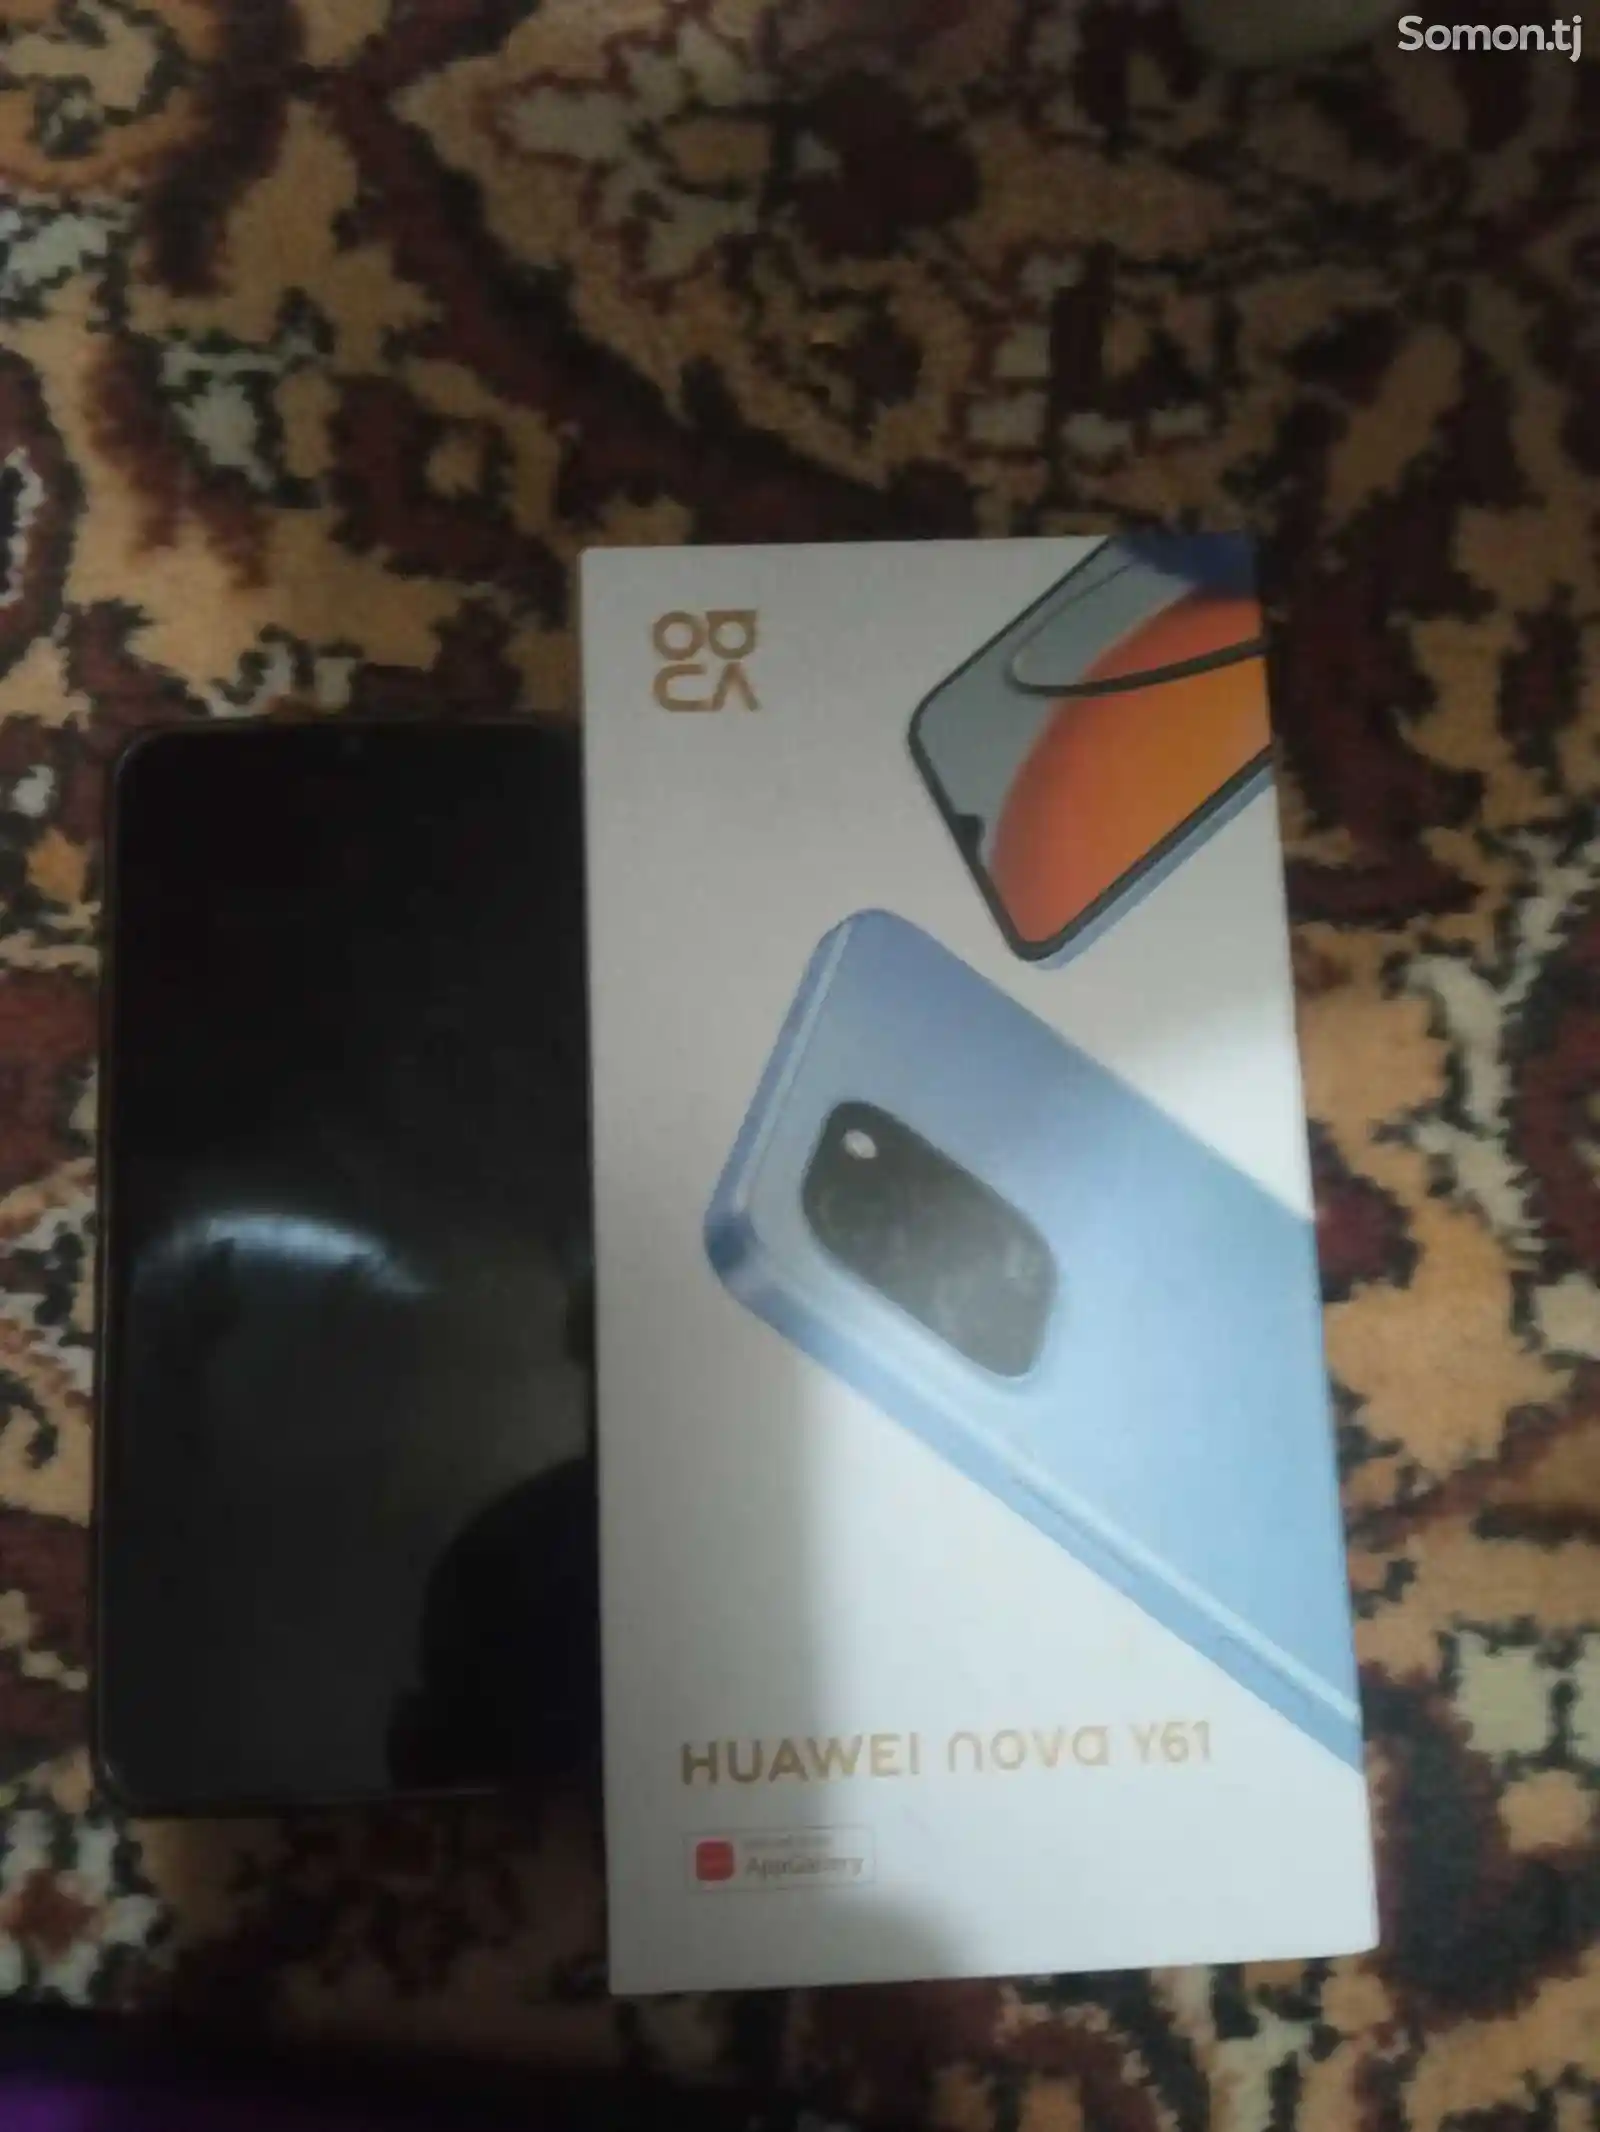 Huawei V6-2